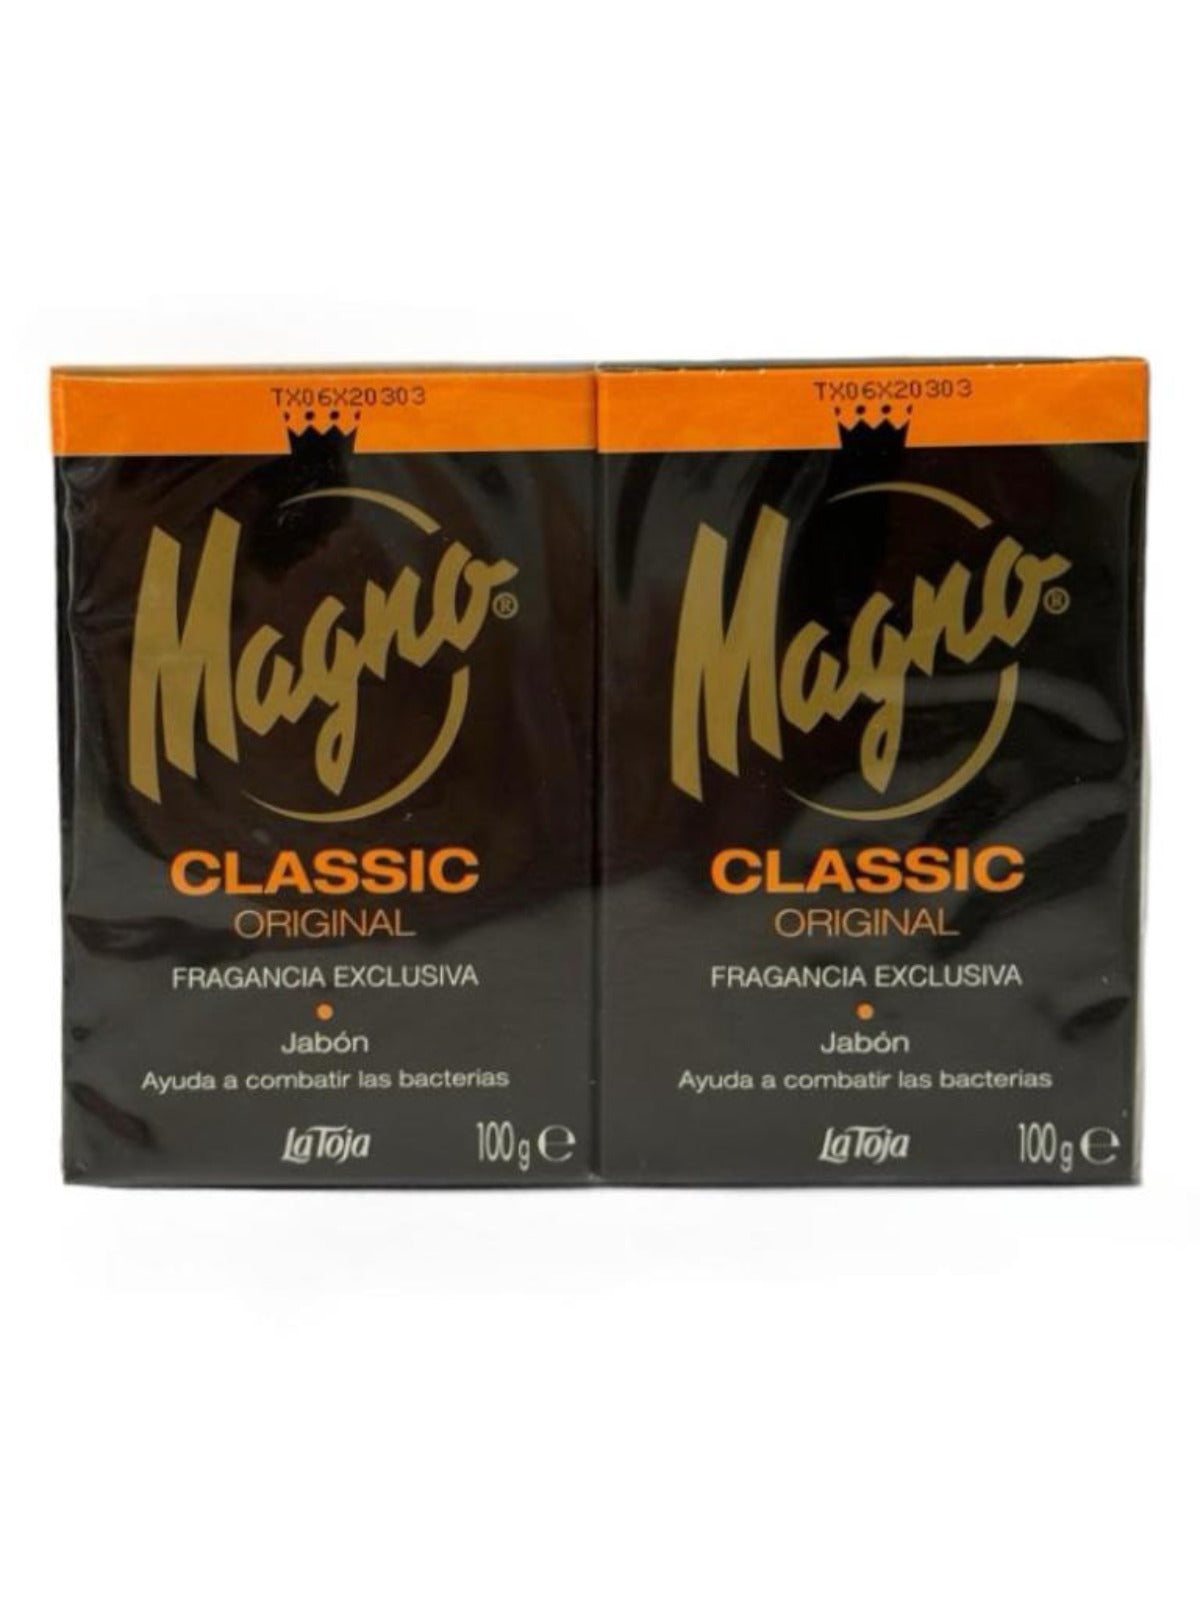 Magno Classic Original Soap Bar 100g